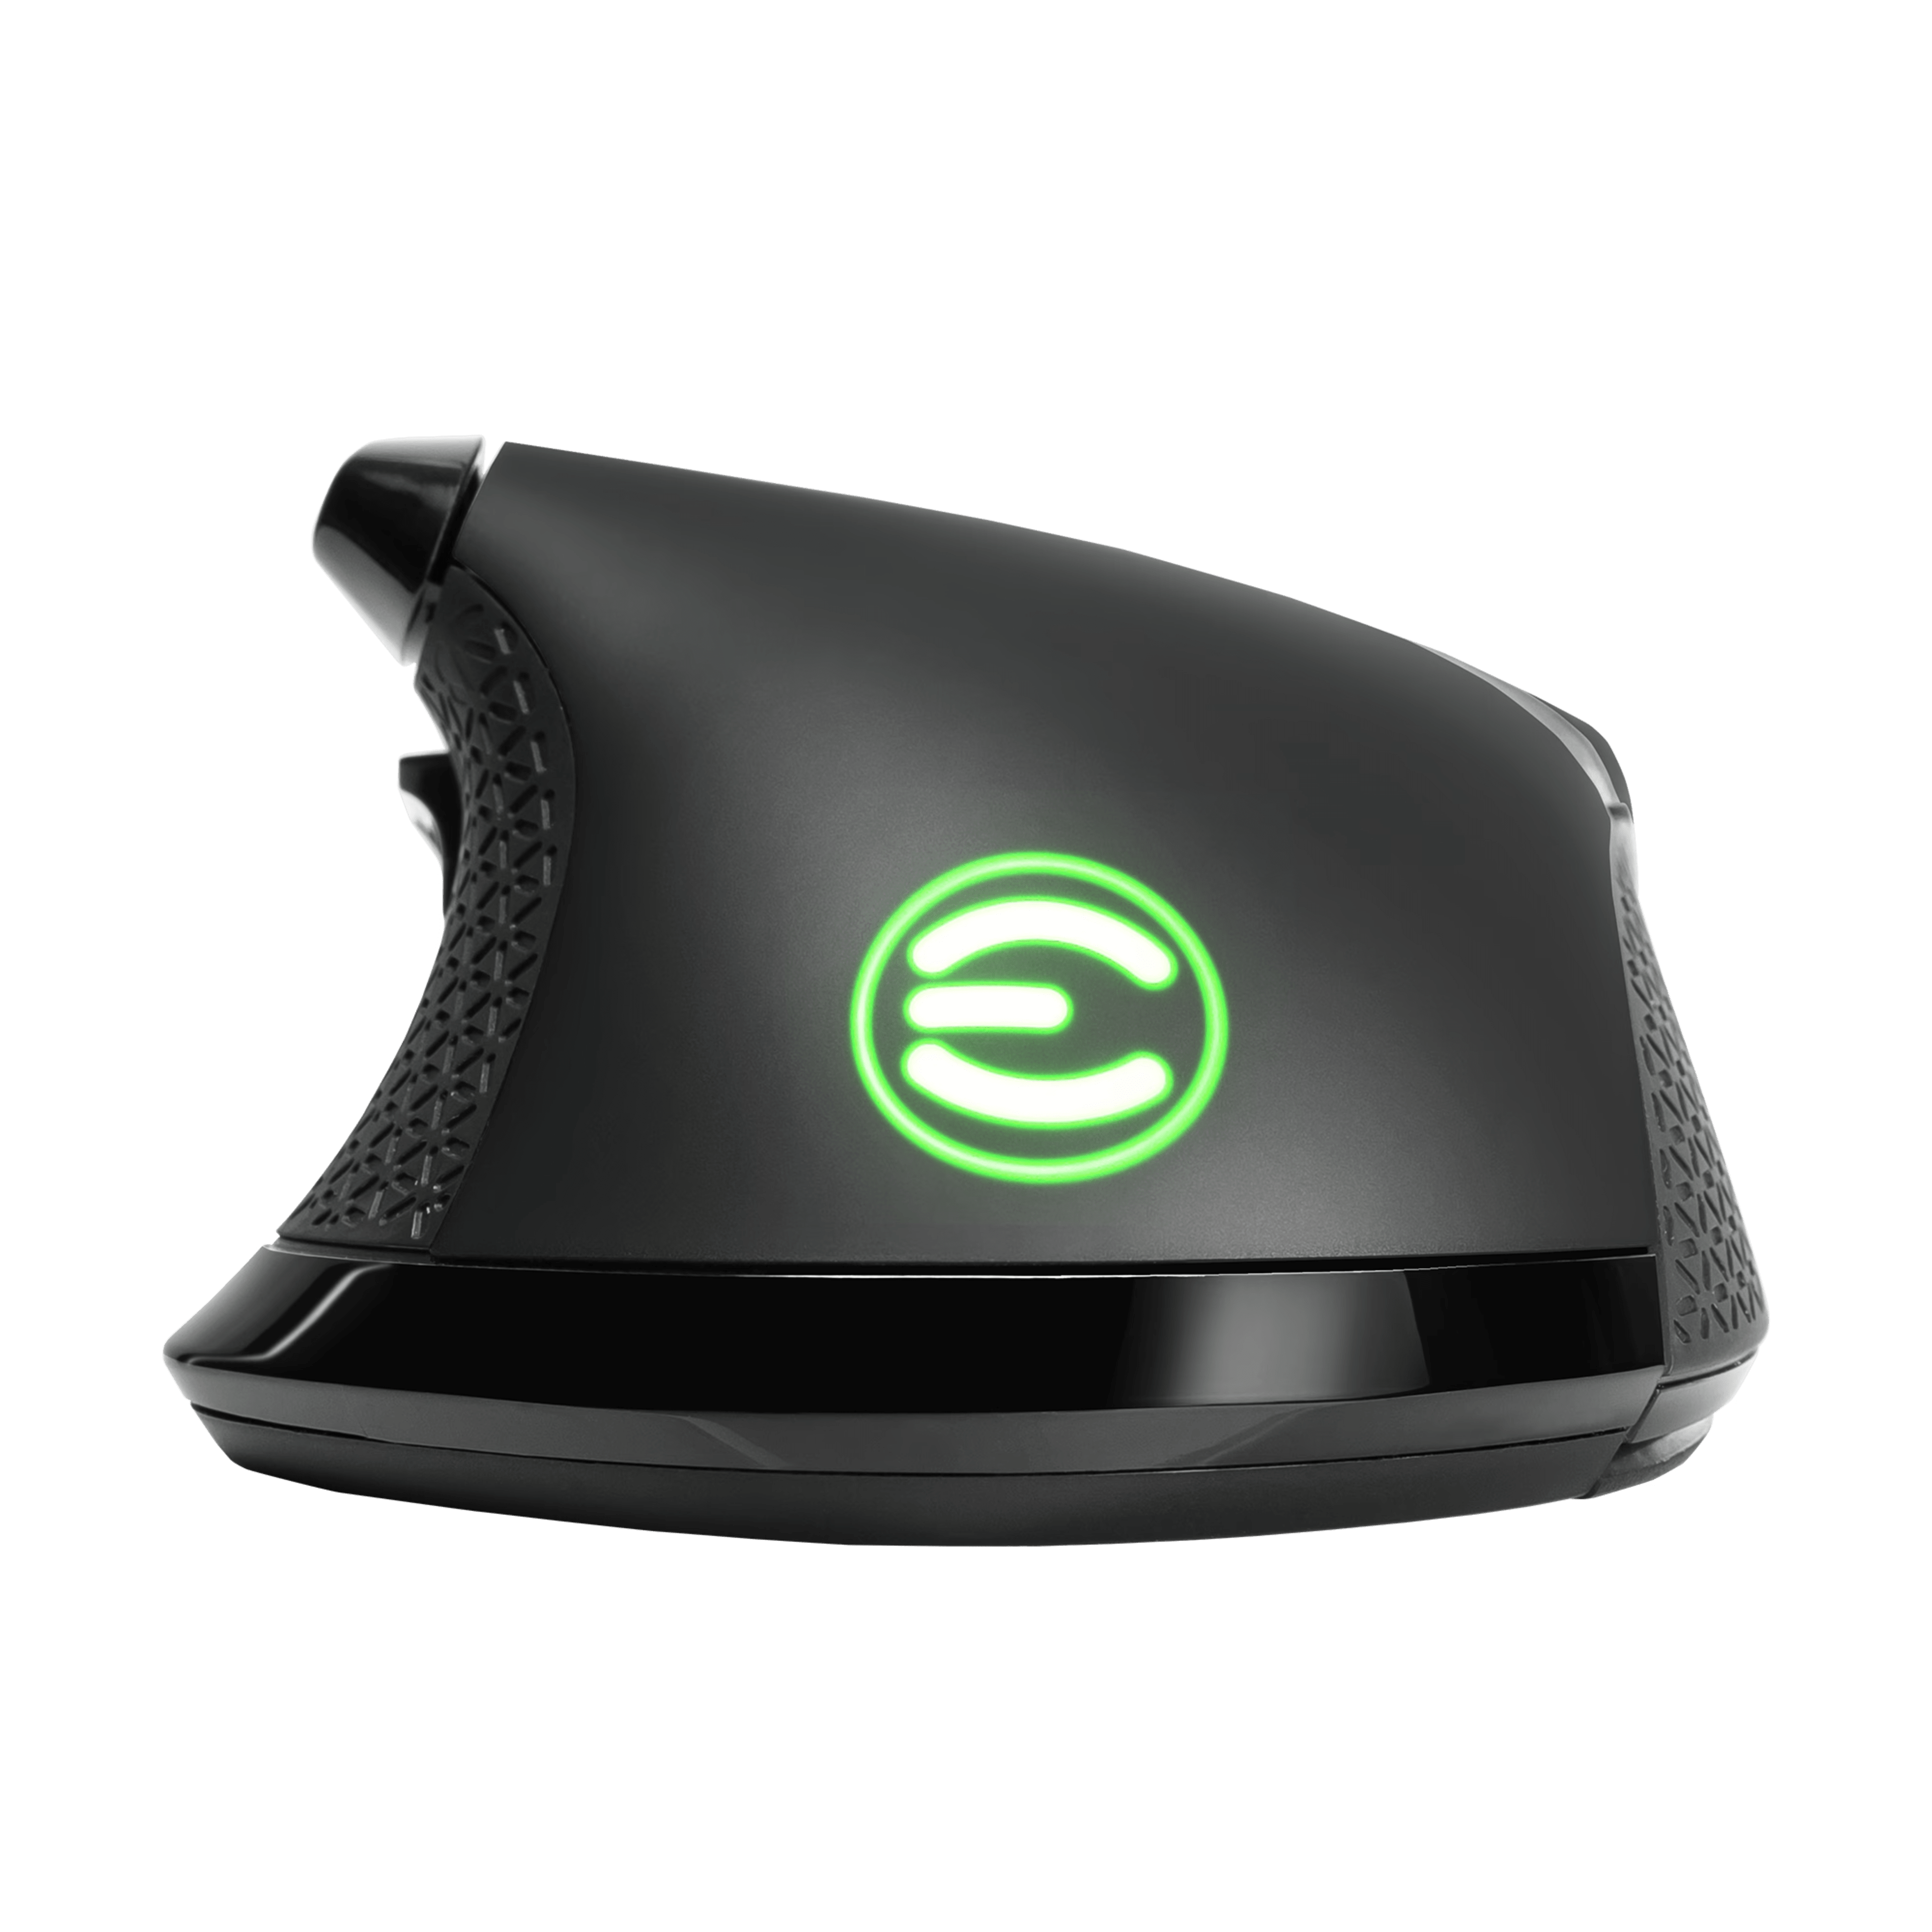 EVGA X17 Gaming Mouse, P/N: 903-W1-17BK-KR